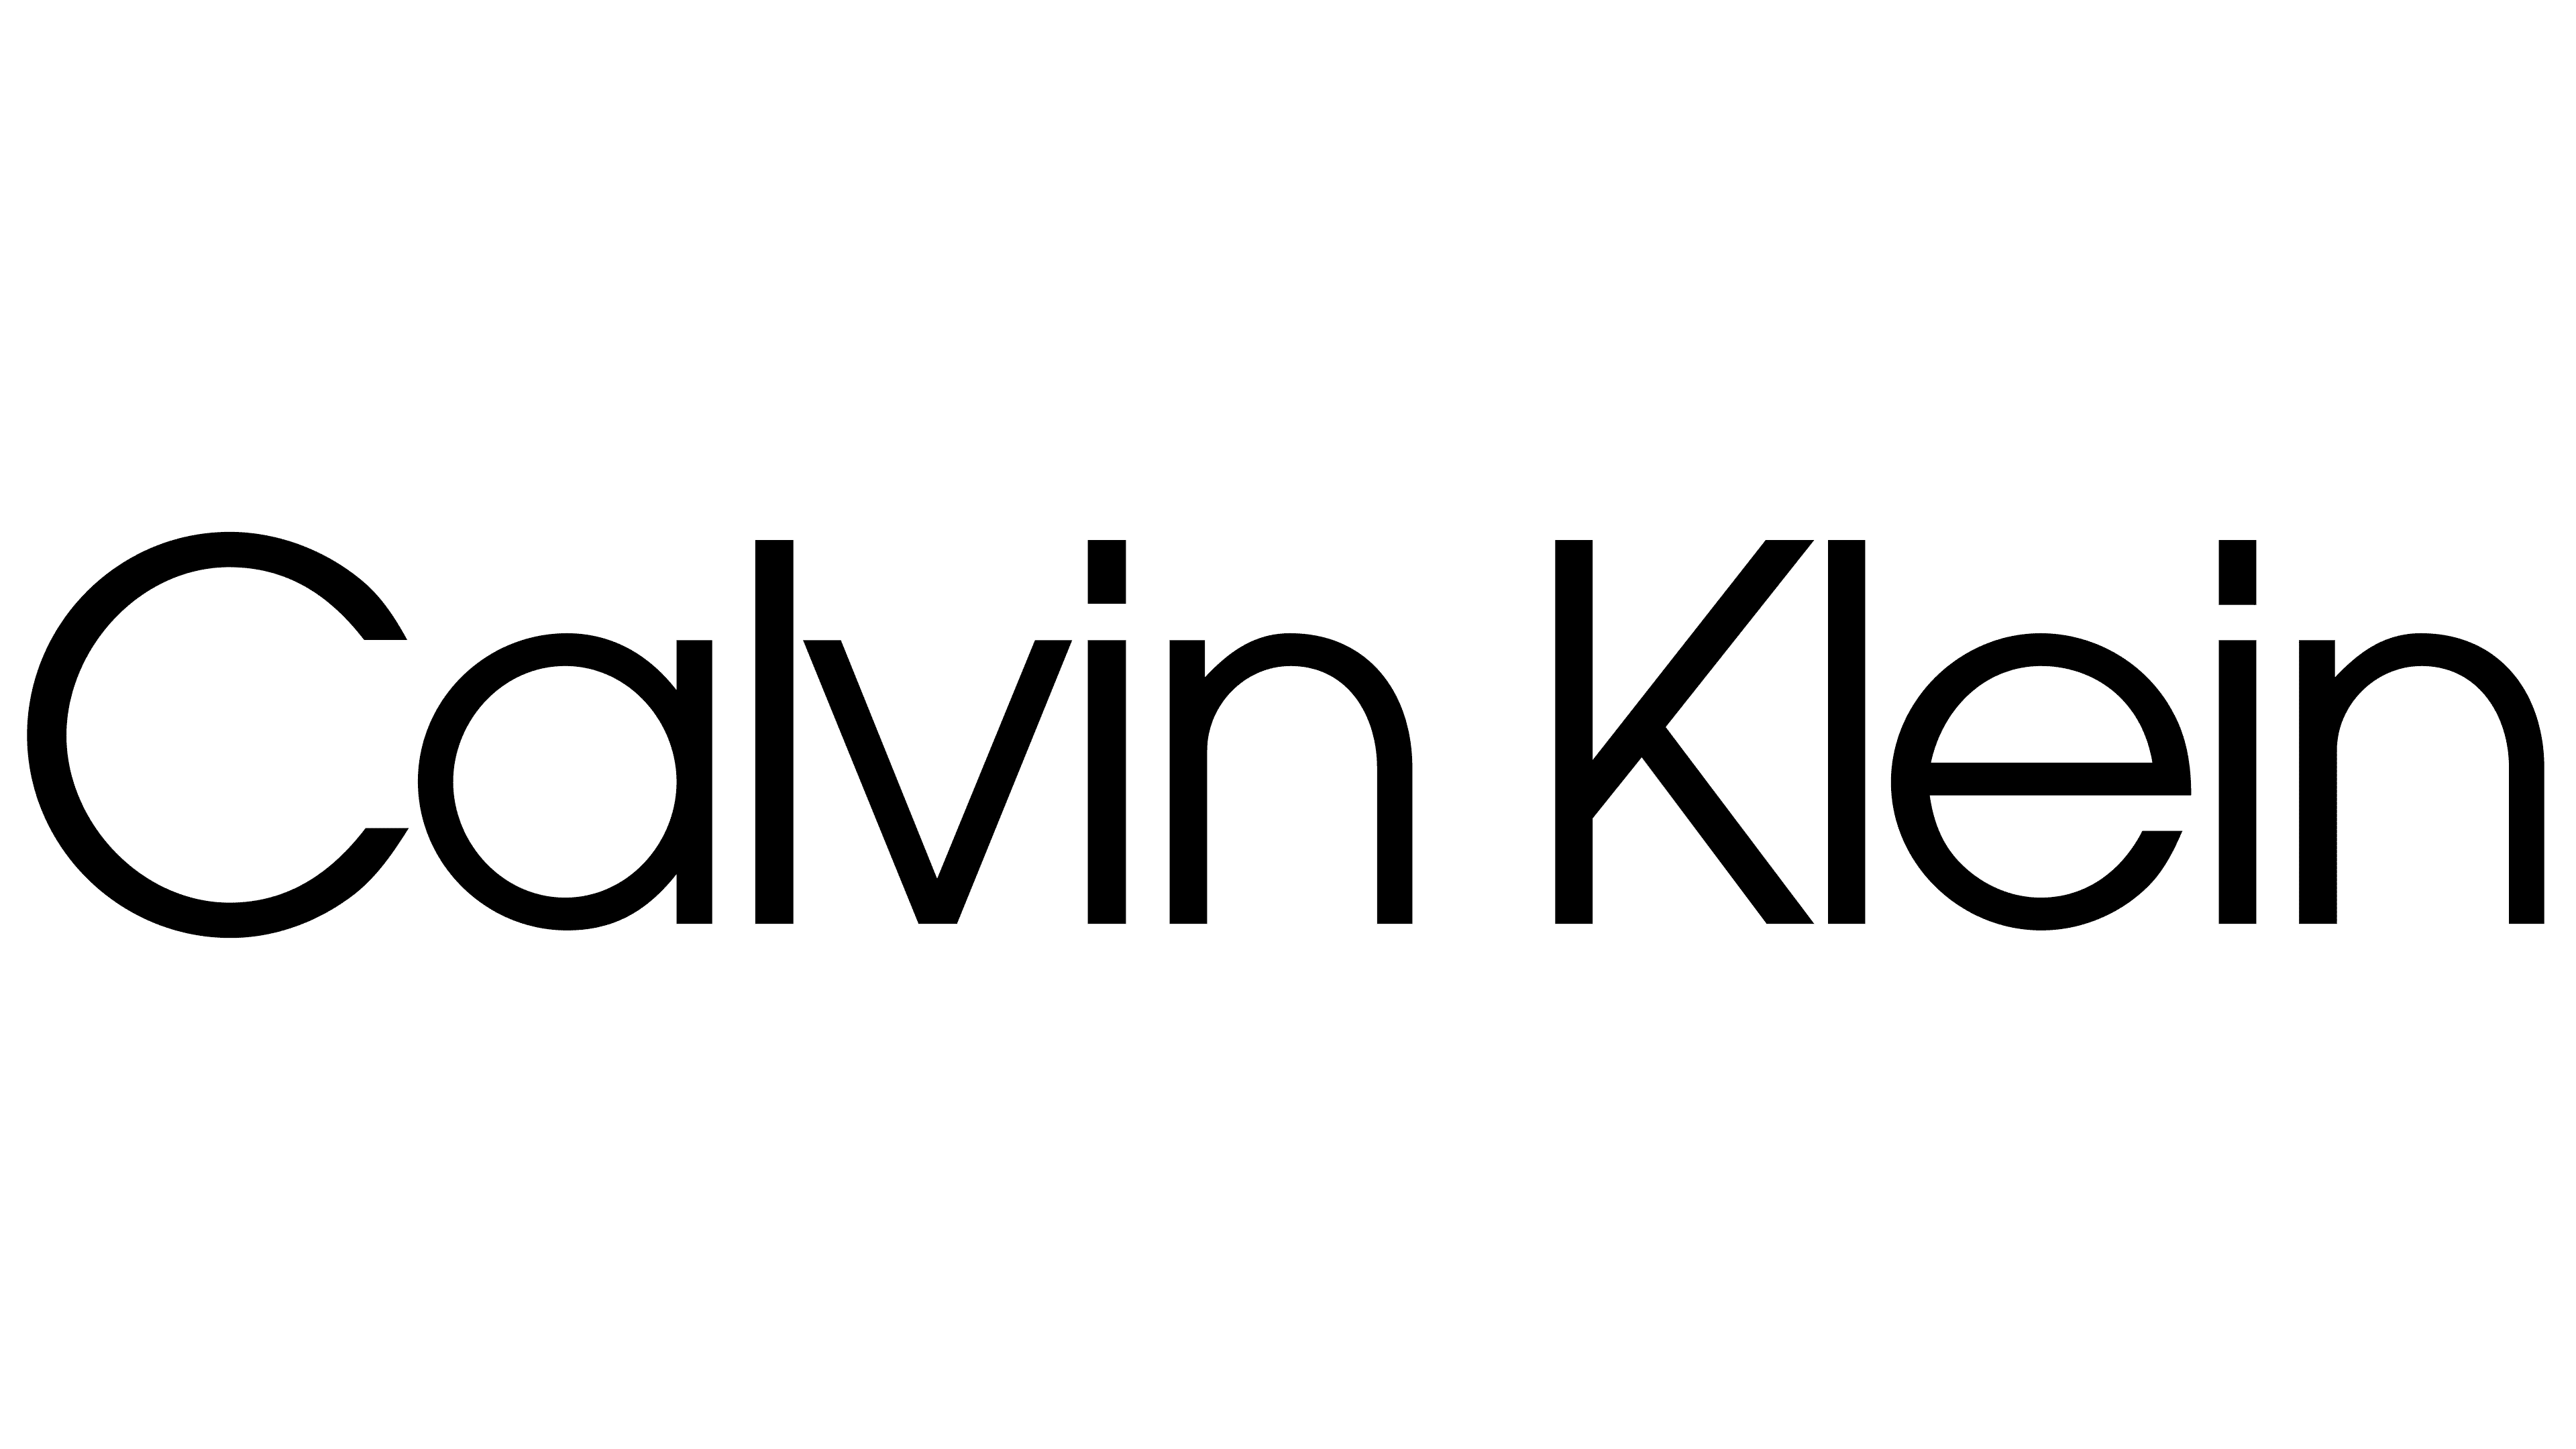 Calvin Klein Full Name Hot Sale, 51% OFF | espirituviajero.com